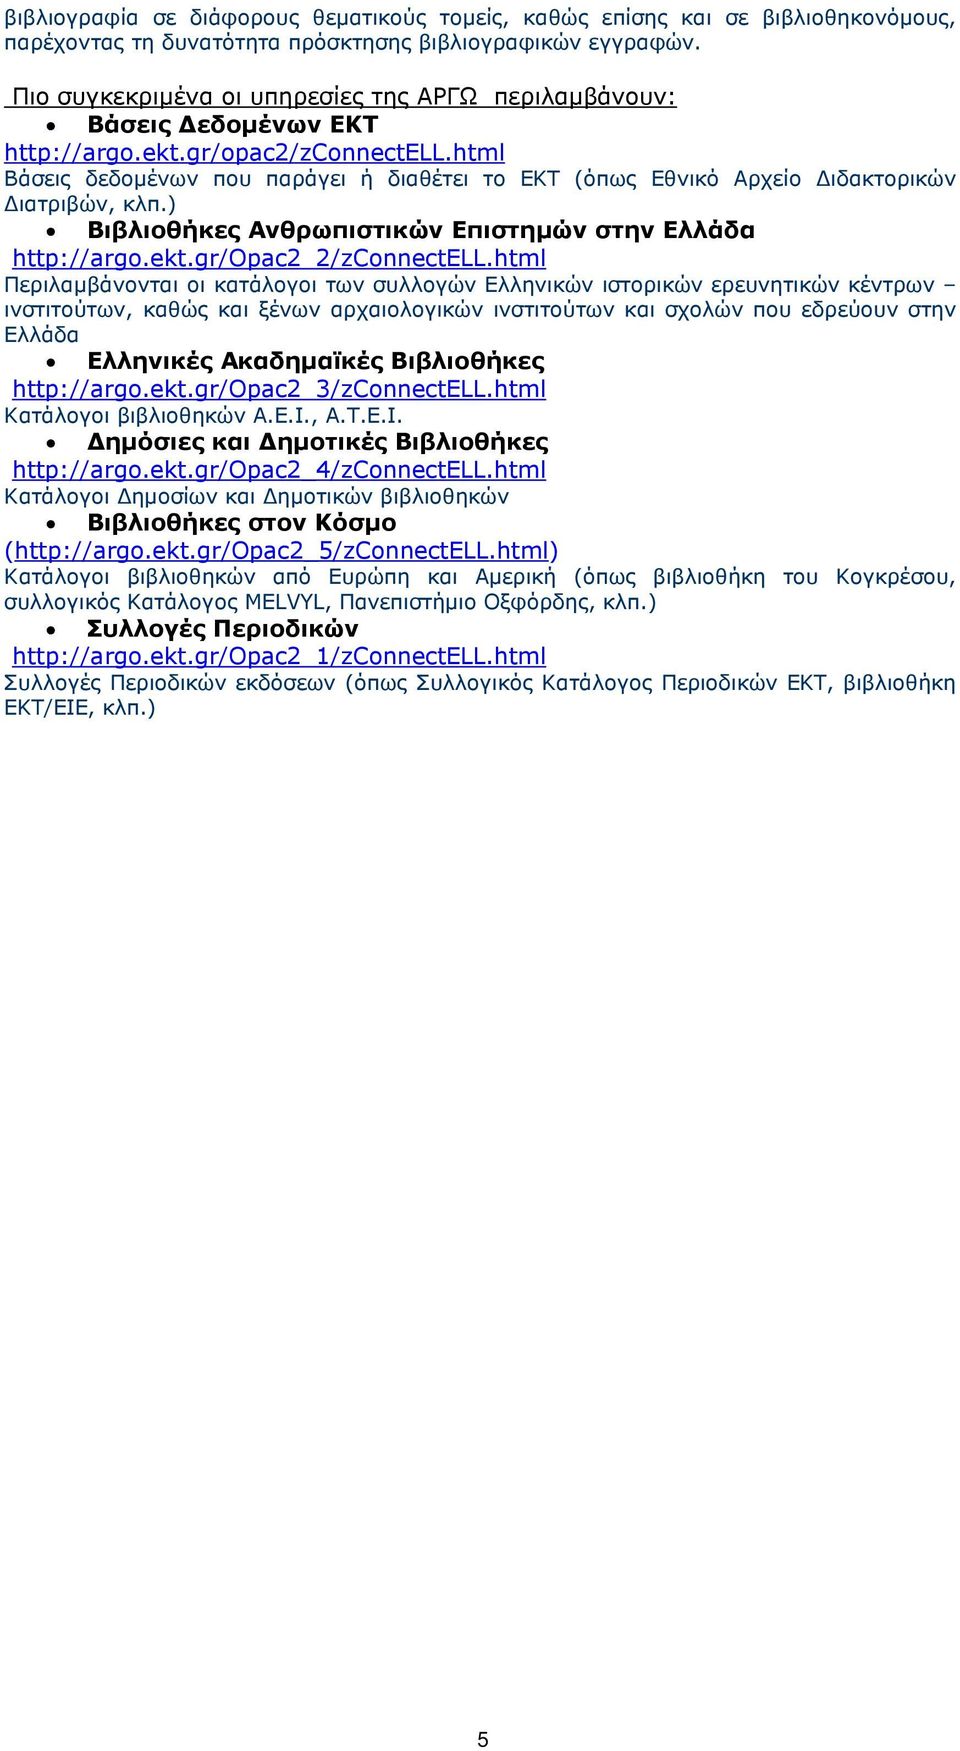 html Βάσεις δεδοµένων που παράγει ή διαθέτει το ΕΚΤ (όπως Εθνικό Αρχείο ιδακτορικών ιατριβών, κλπ.) Βιβλιοθήκες Ανθρωπιστικών Επιστηµών στην Ελλάδα http://argo.ekt.gr/opac2_2/zconnectell.